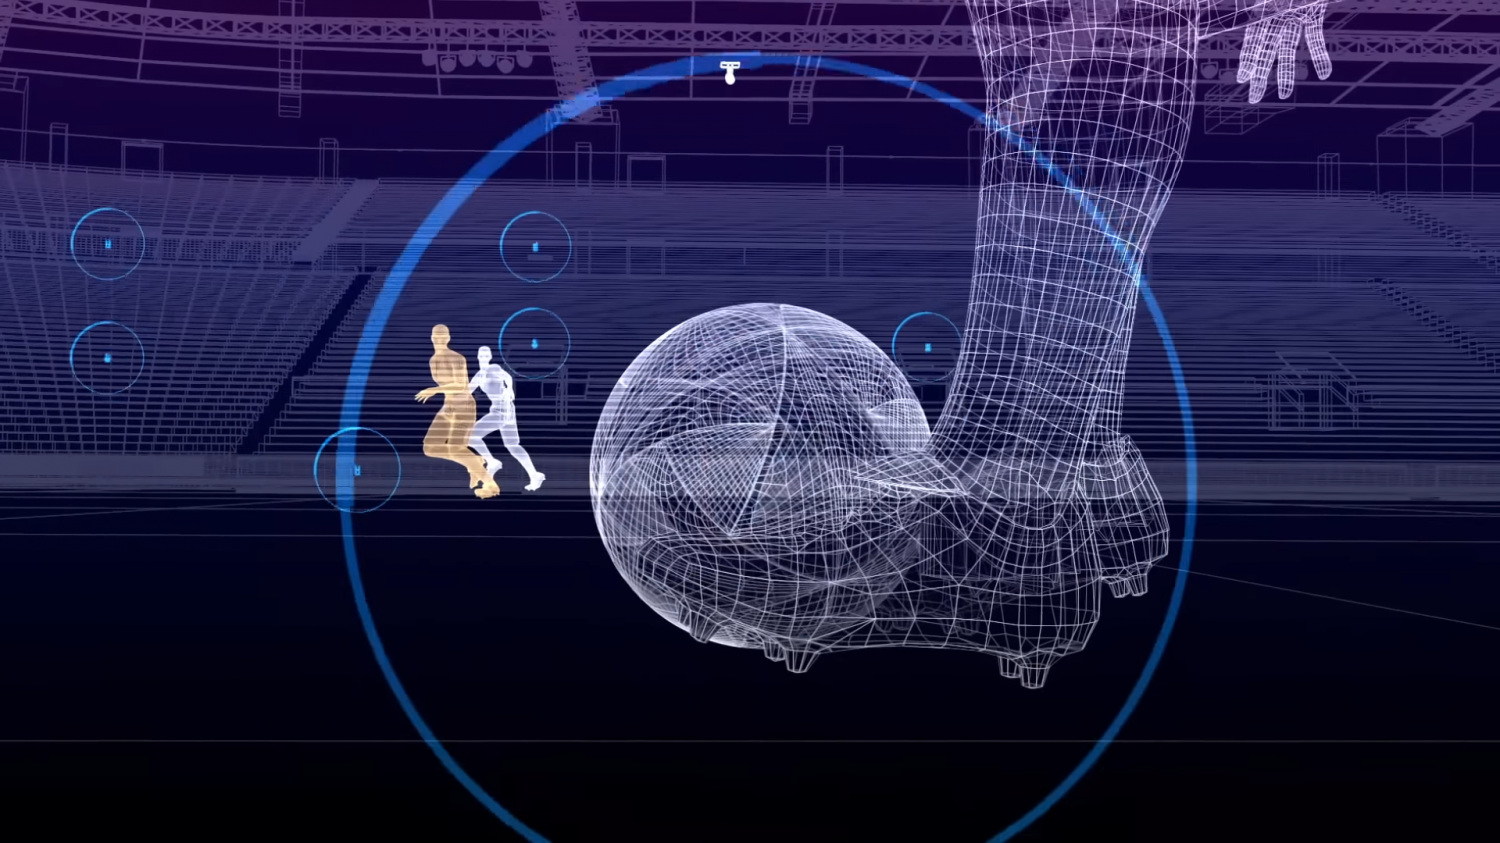 AI in sports: FIFA world cup 2022 technologies